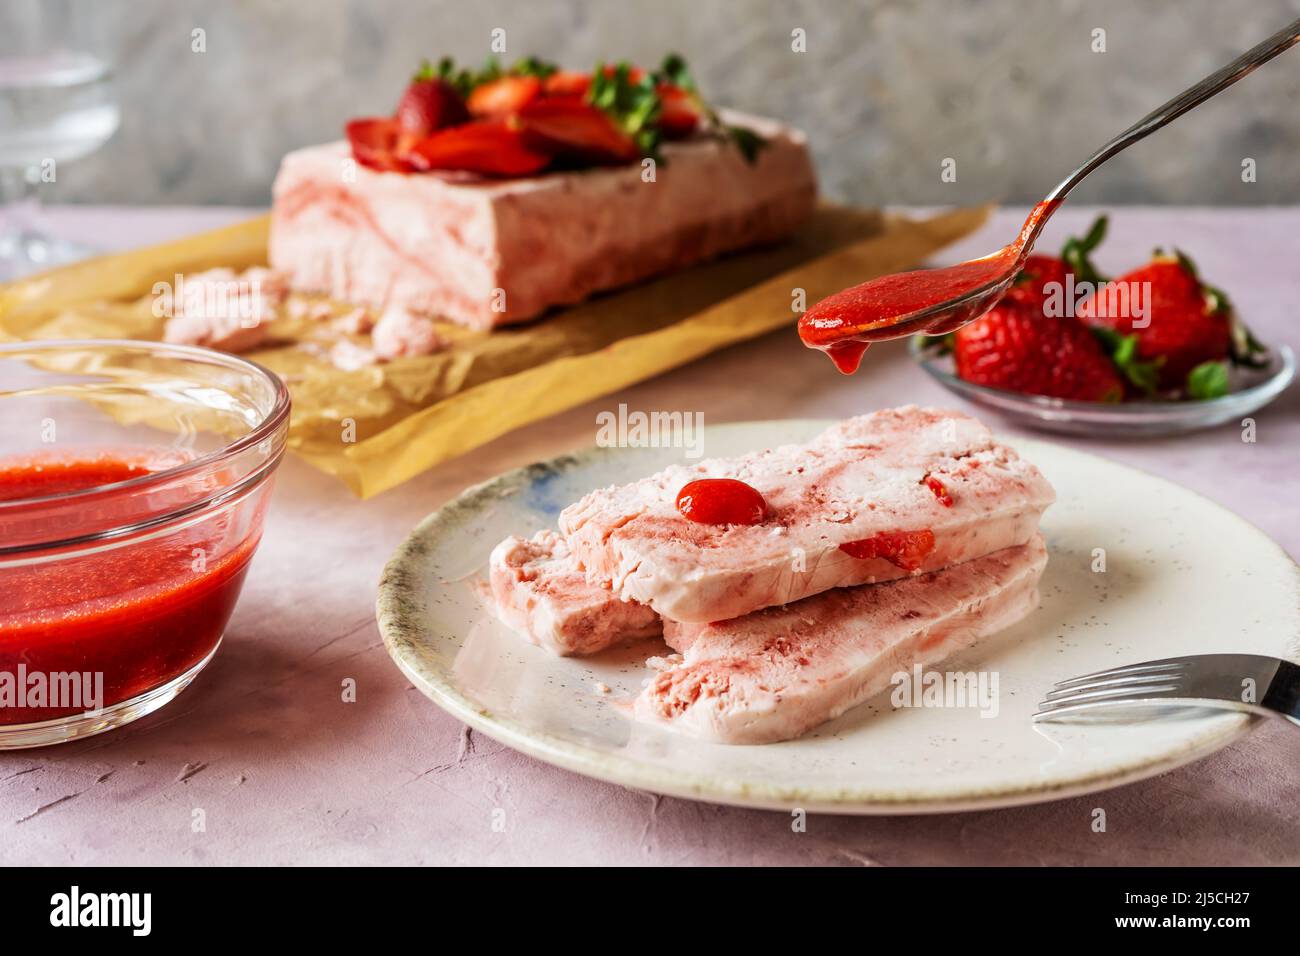 Italian strawberry dessert Semifreddo on plate with teaspoon pouring strawberry's sauce Stock Photo